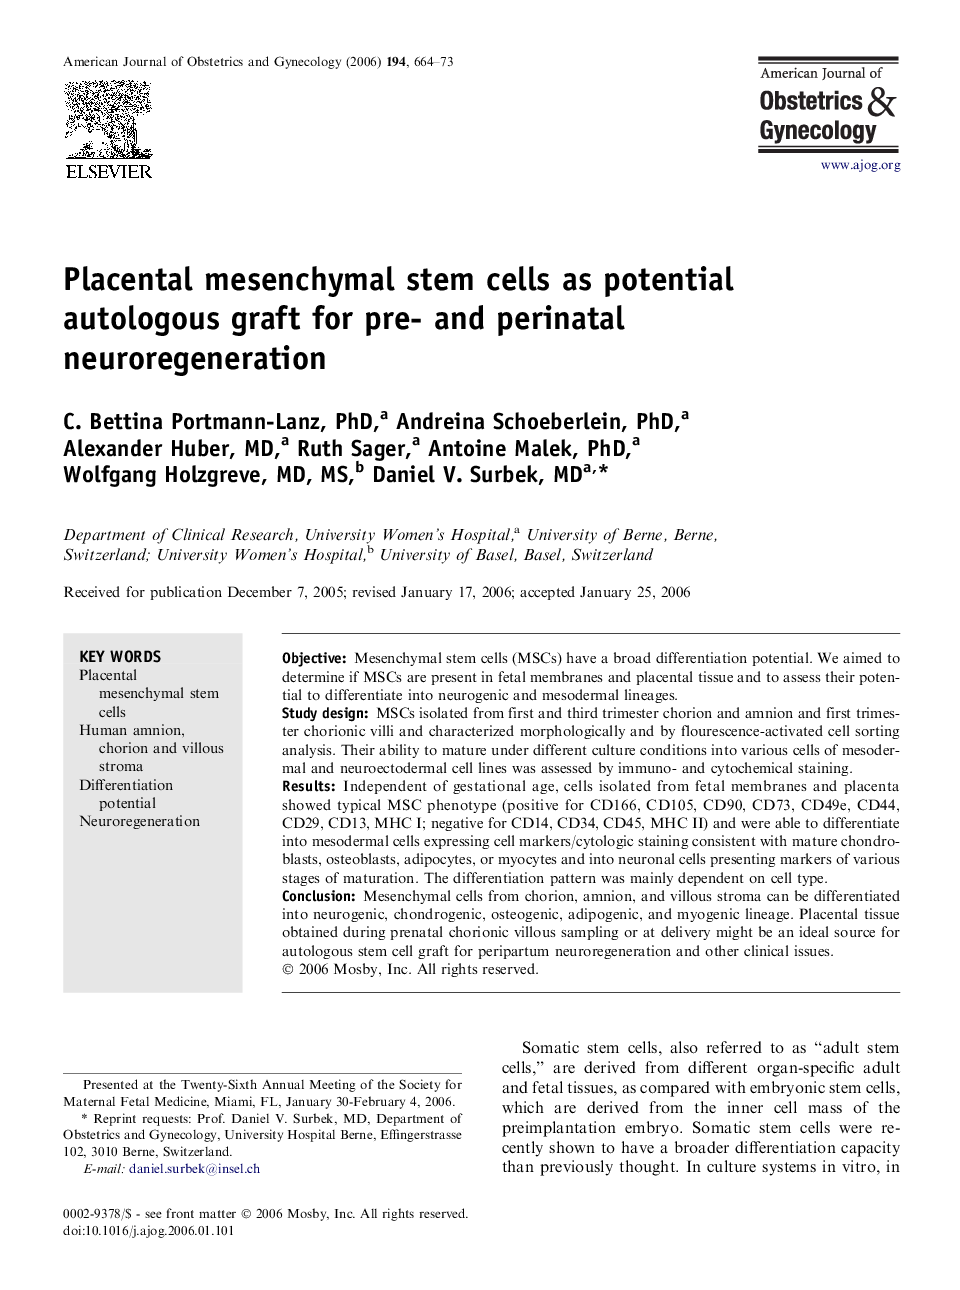 Placental mesenchymal stem cells as potential autologous graft for pre- and perinatal neuroregeneration 